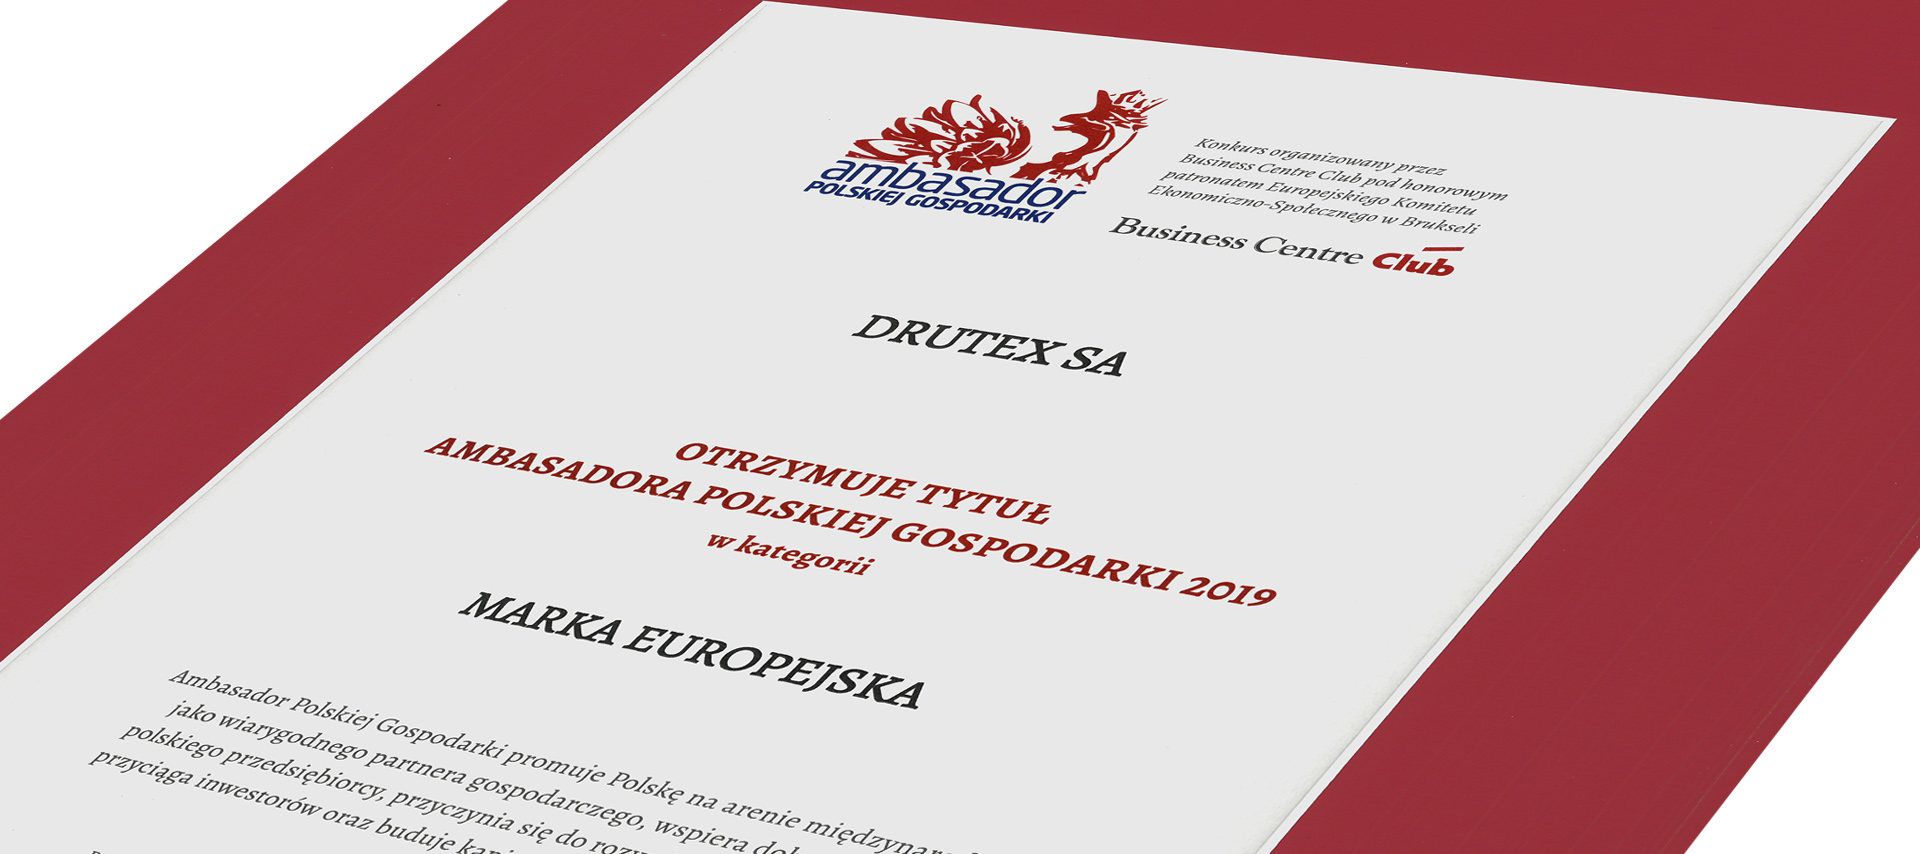 Drutex yet again has been awarded the Ambassador of Polish Economy title